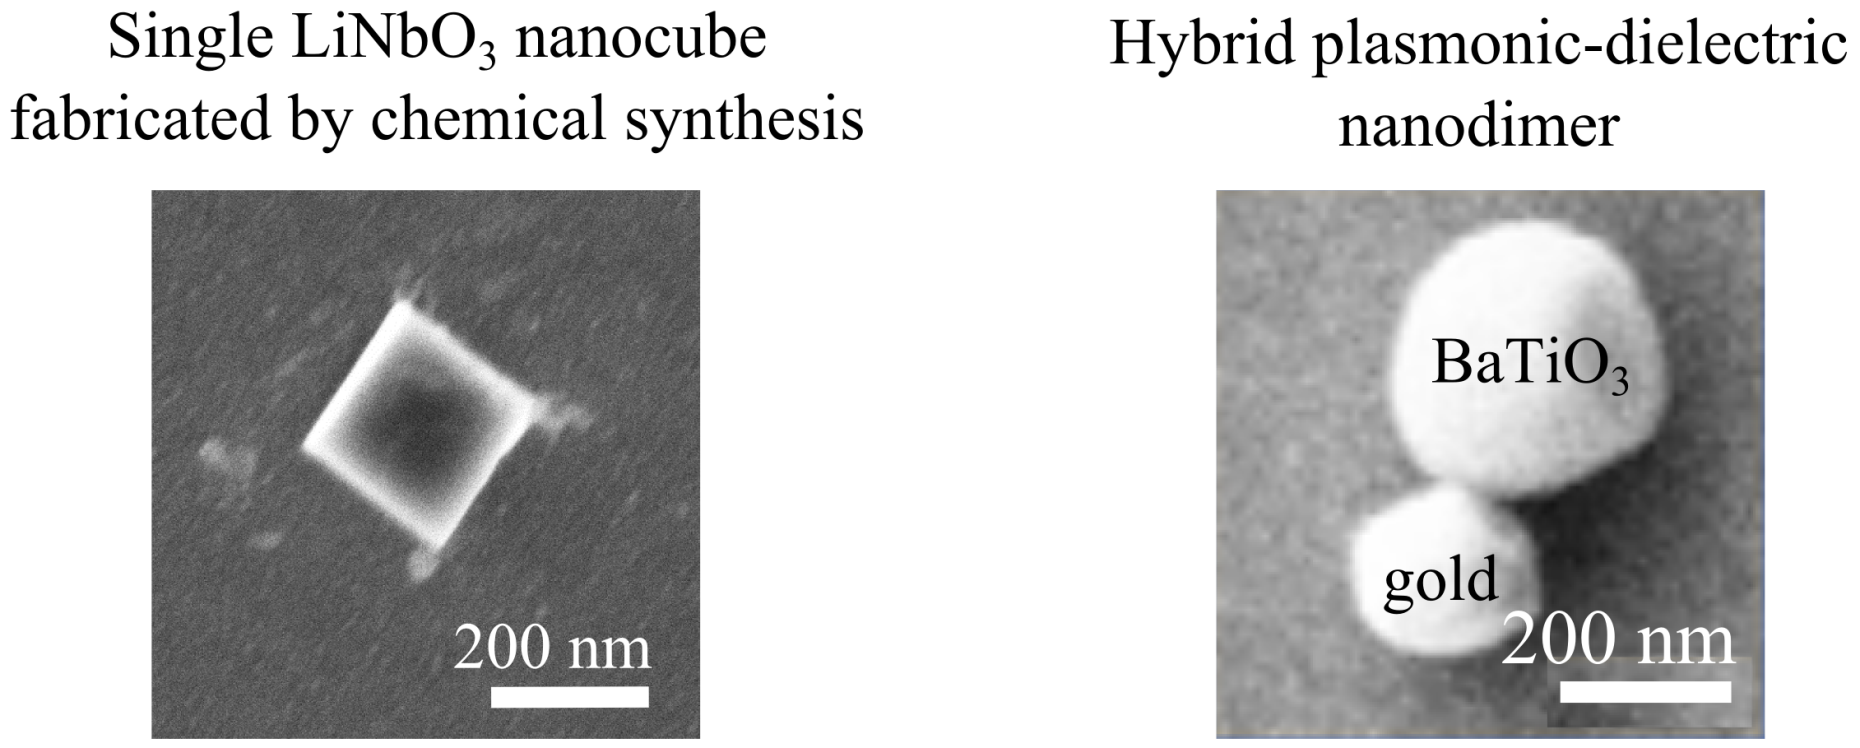 LiNbO3 nanocube and hybrid dimer